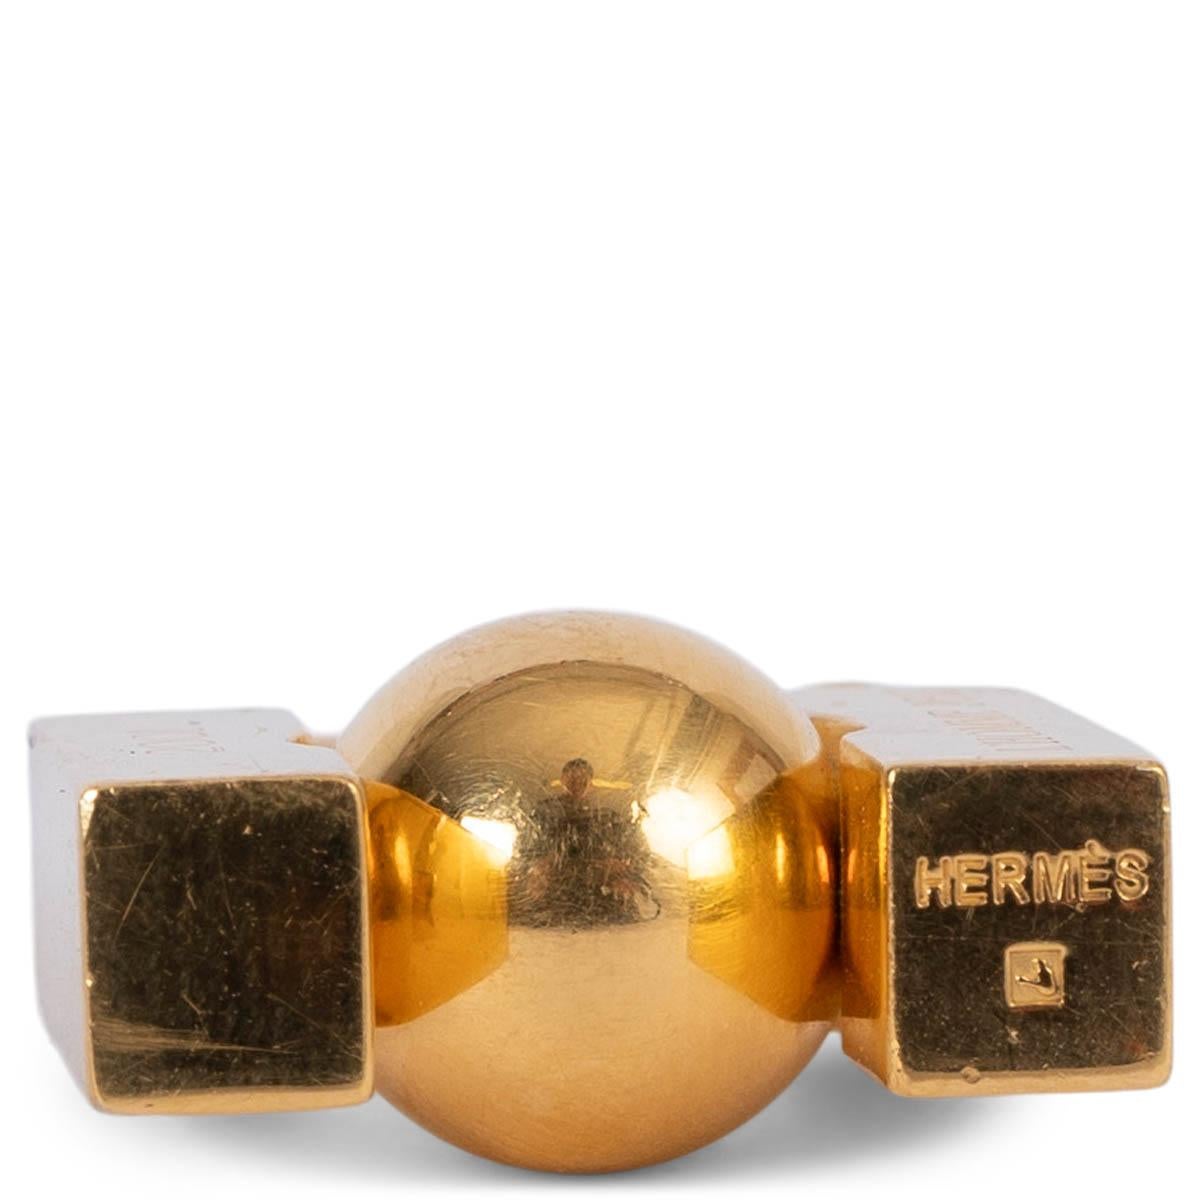 HERMES gold LTD ED 2001 L'HOMME PEUT EMBELLIR LA TERRE CADENA Lock Bag Charm For Sale 1